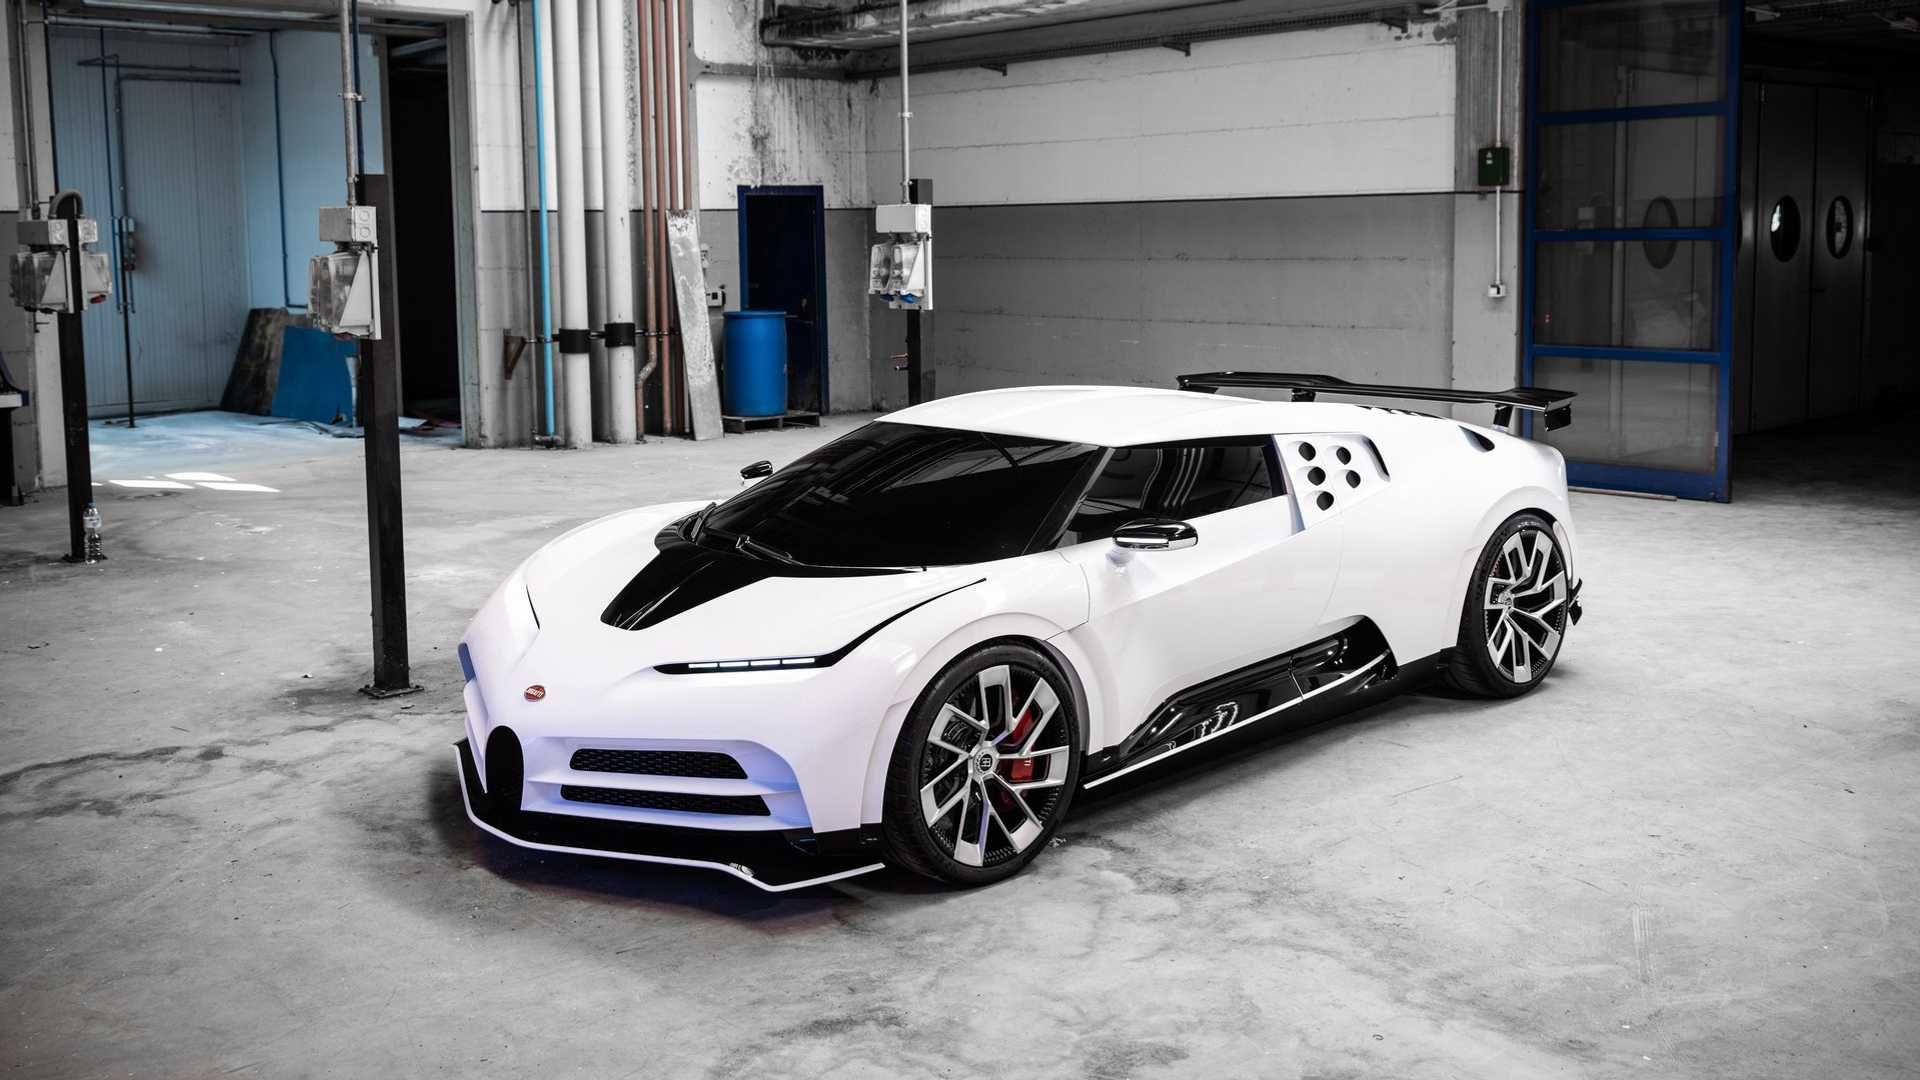 مرجع متخصصين ايران نماي اصلي ابرخودرو بوگاتي سنتودايچي / Bugatti Centodieci hypercar سفيد رنگ در گاراژ